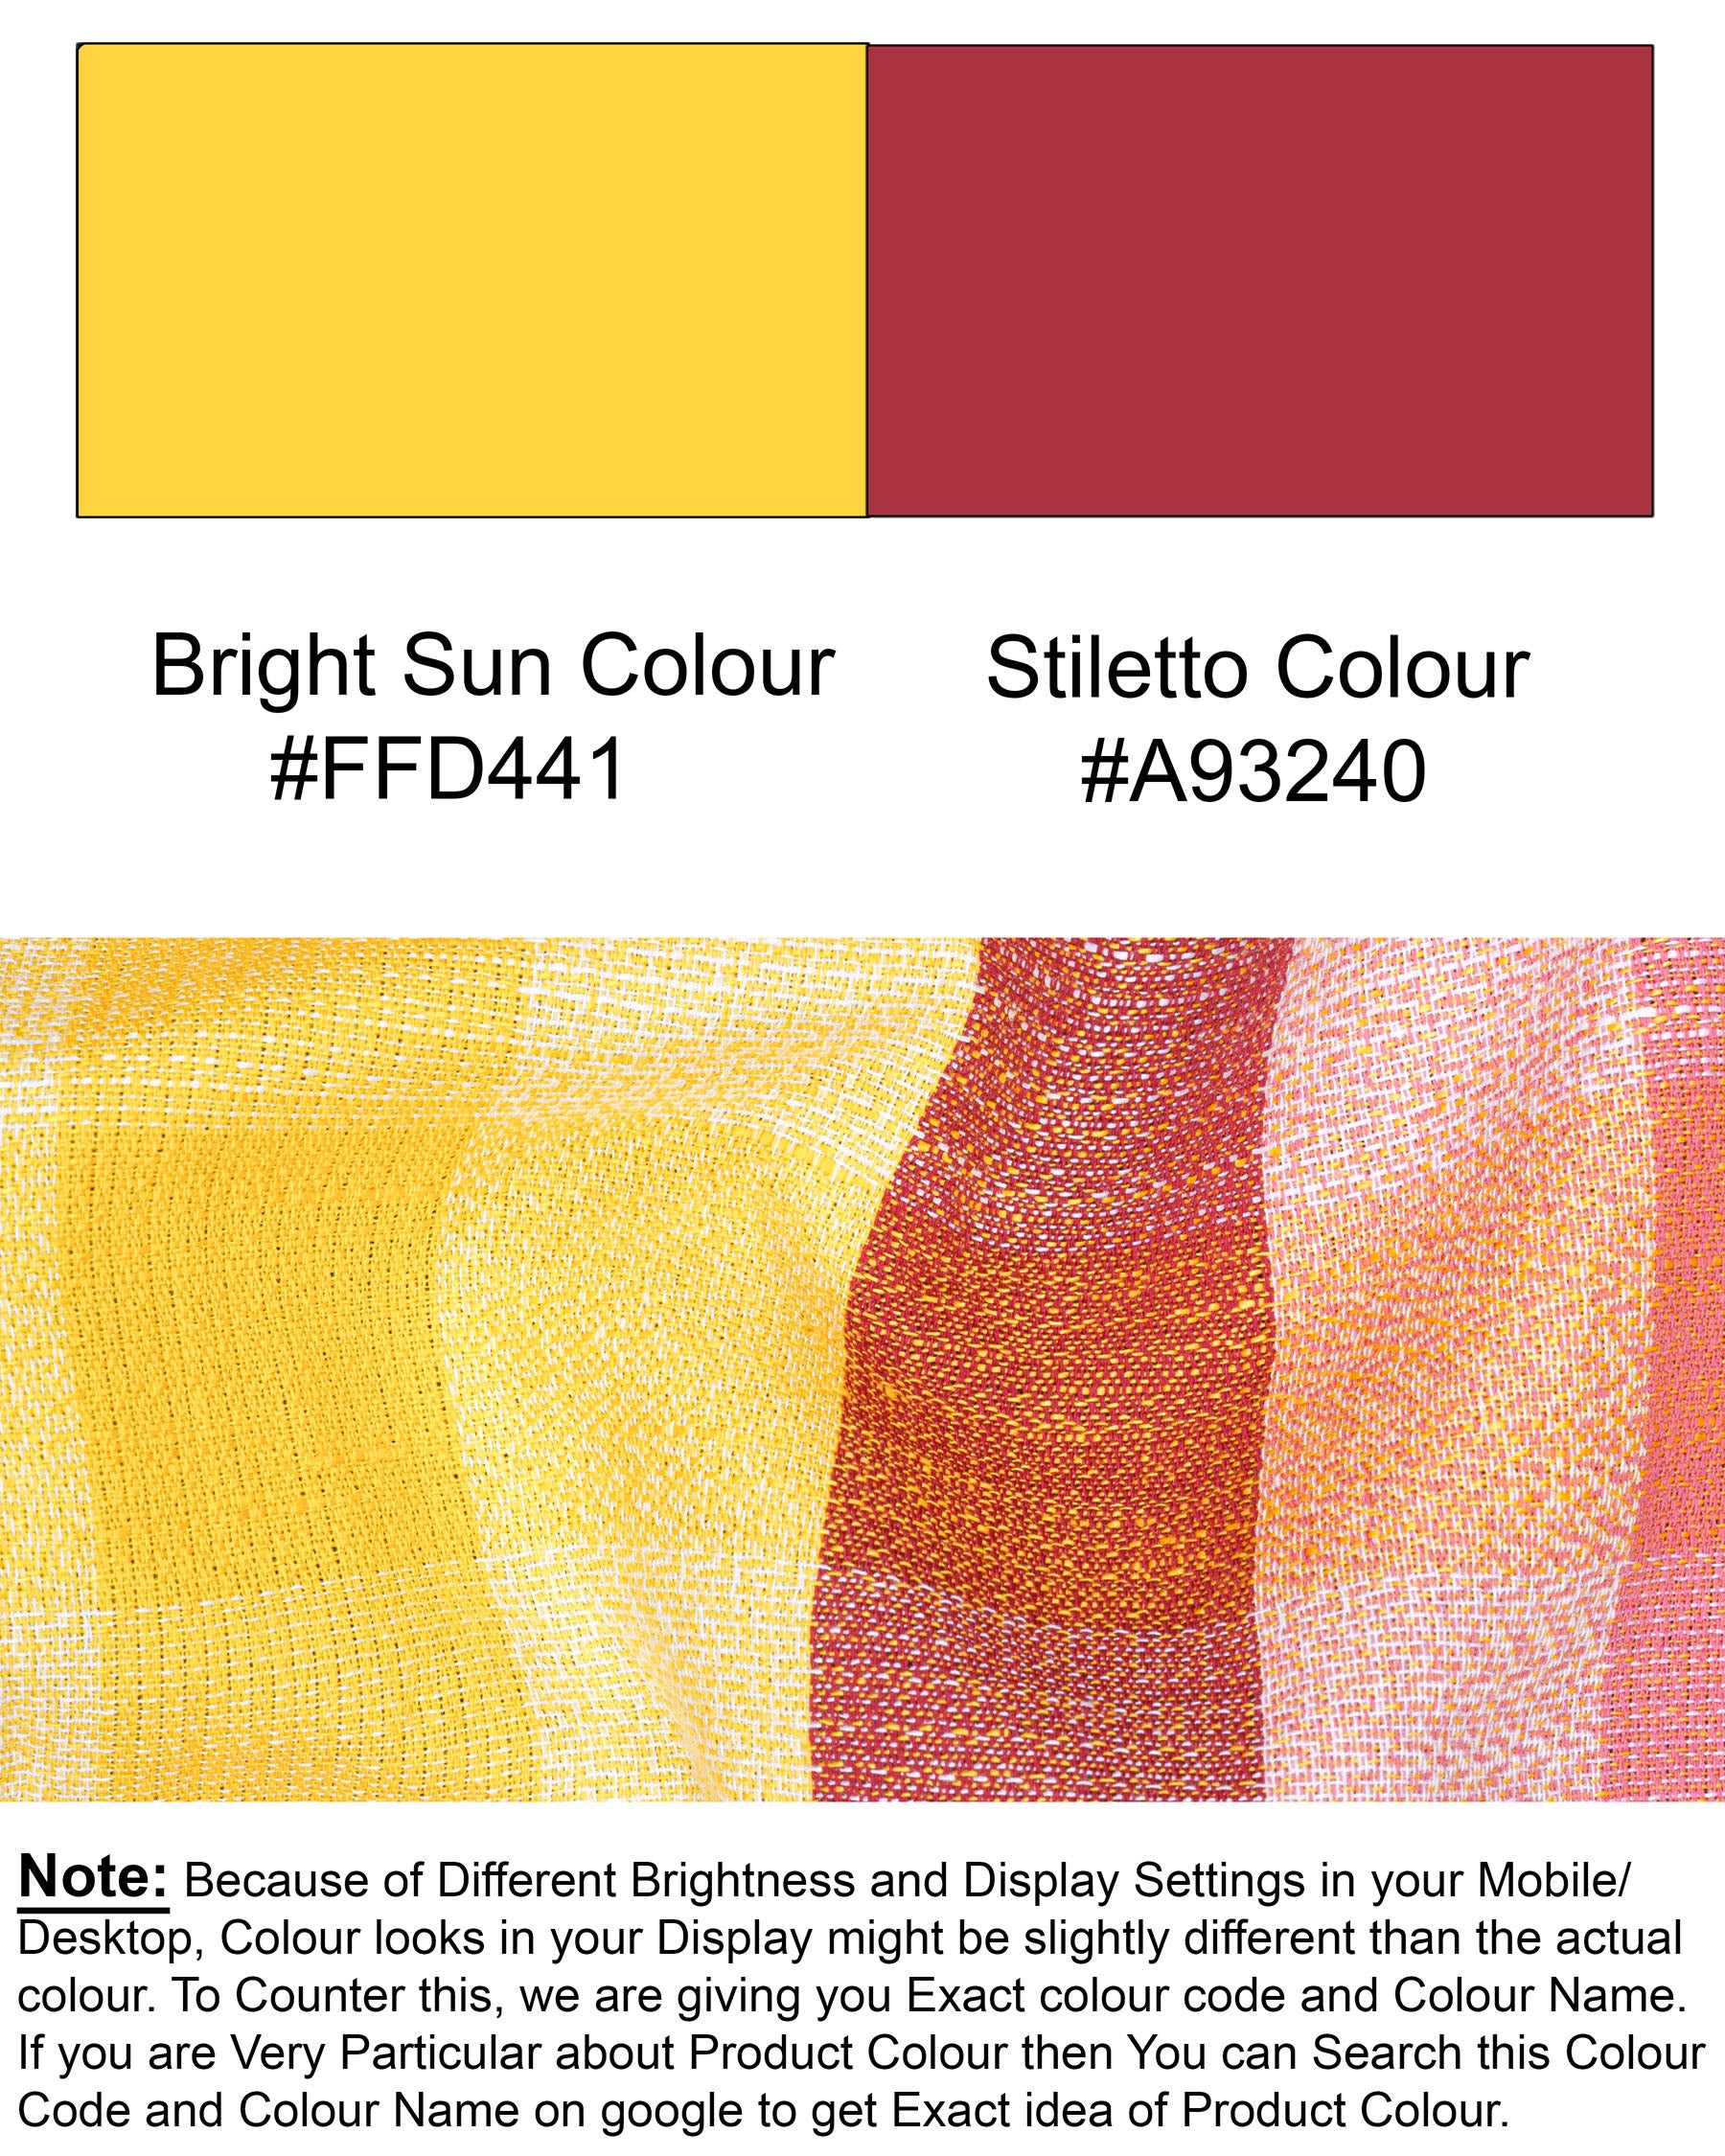 Bright Sun Yellow with Stiletto Red Twill Plaid Premium Cotton Shirt 6716-M-38, 6716-M-H-38, 6716-M-39, 6716-M-H-39, 6716-M-40, 6716-M-H-40, 6716-M-42, 6716-M-H-42, 6716-M-44, 6716-M-H-44, 6716-M-46, 6716-M-H-46, 6716-M-48, 6716-M-H-48, 6716-M-50, 6716-M-H-50, 6716-M-52, 6716-M-H-52